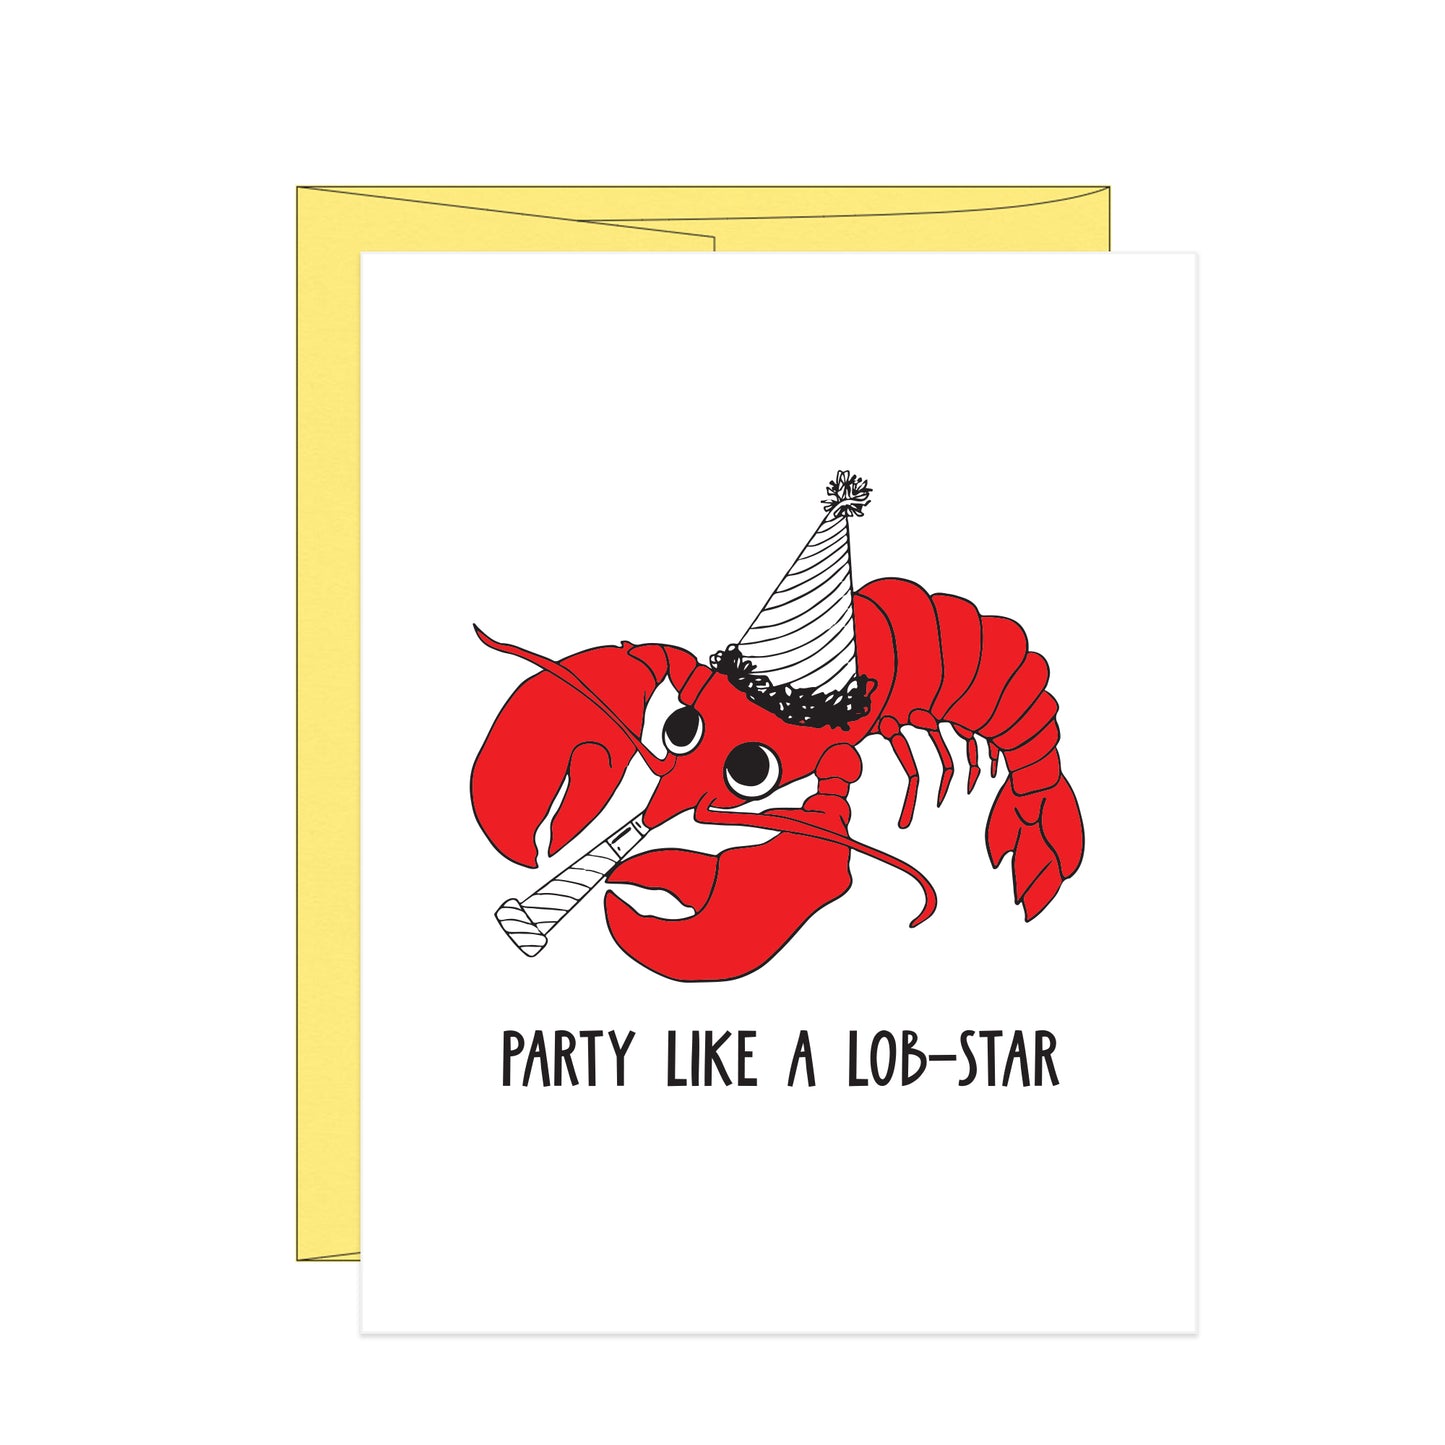 Party Like a Lob-Star